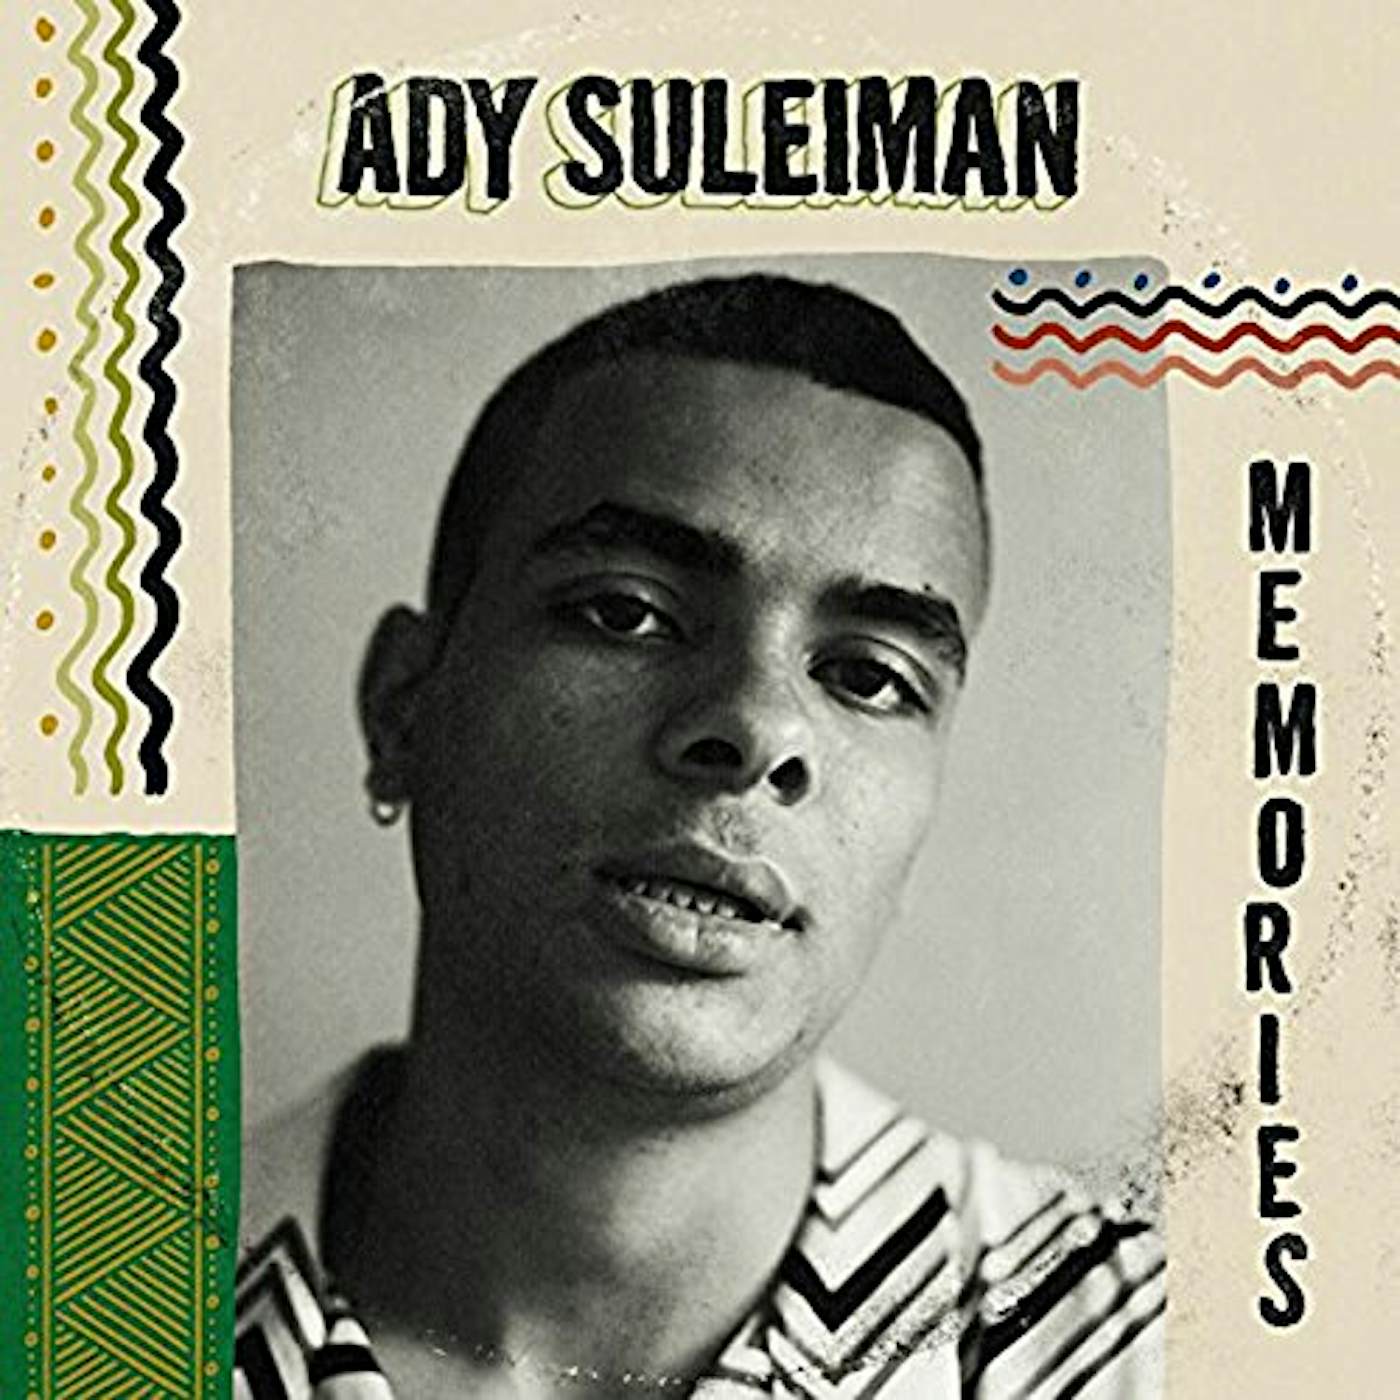 Ady Suleiman MEMORIES CD